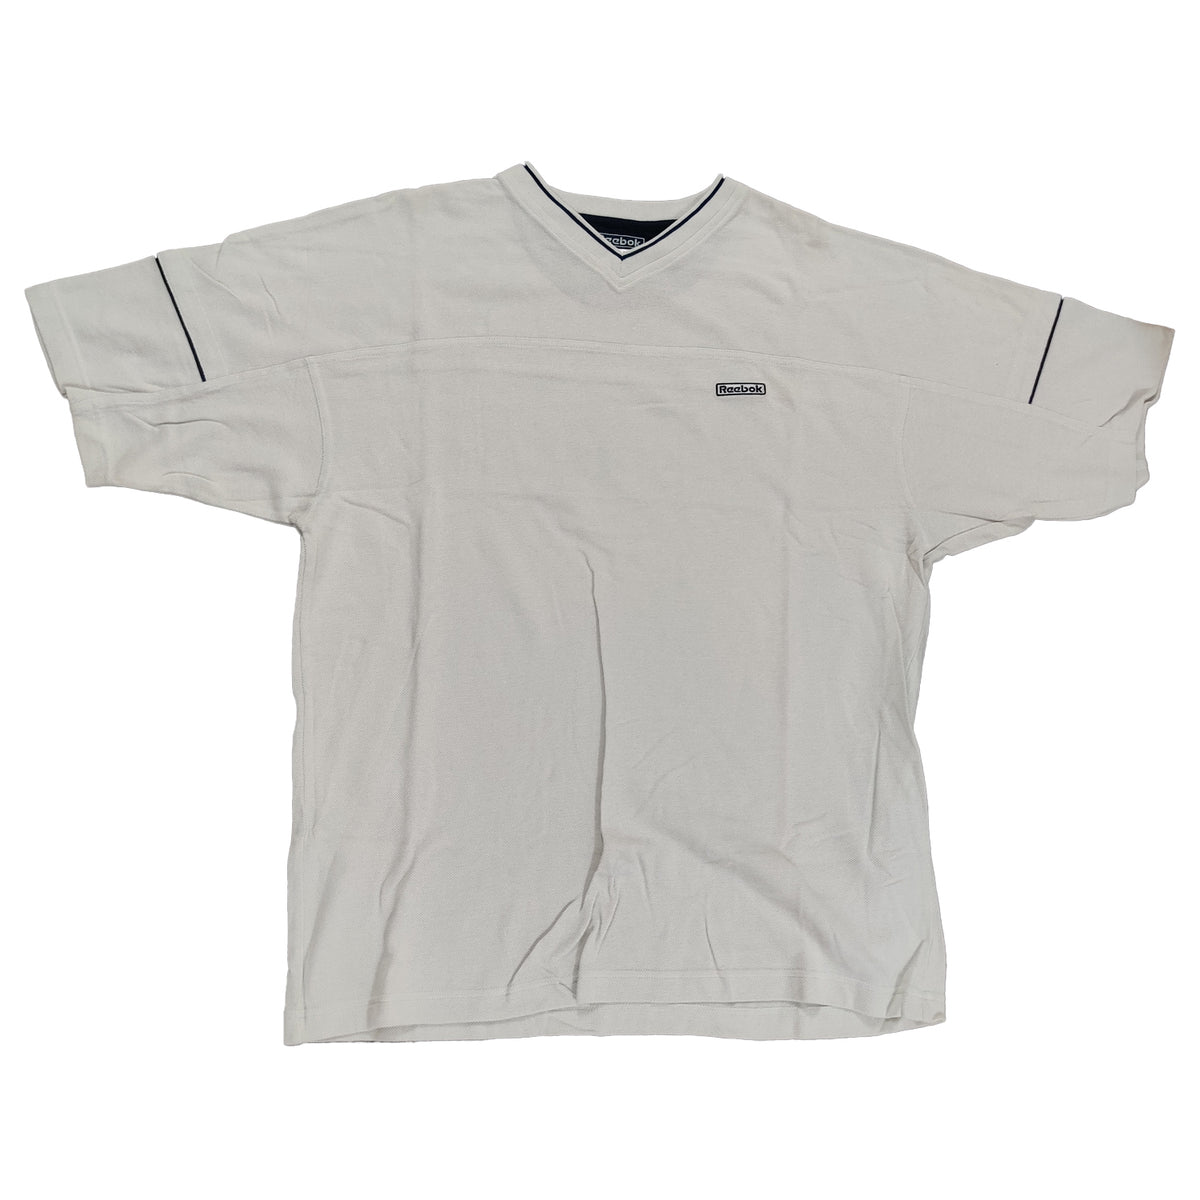 Reebok Mens Clearance Lined V-Neck T-Shirt - Medium